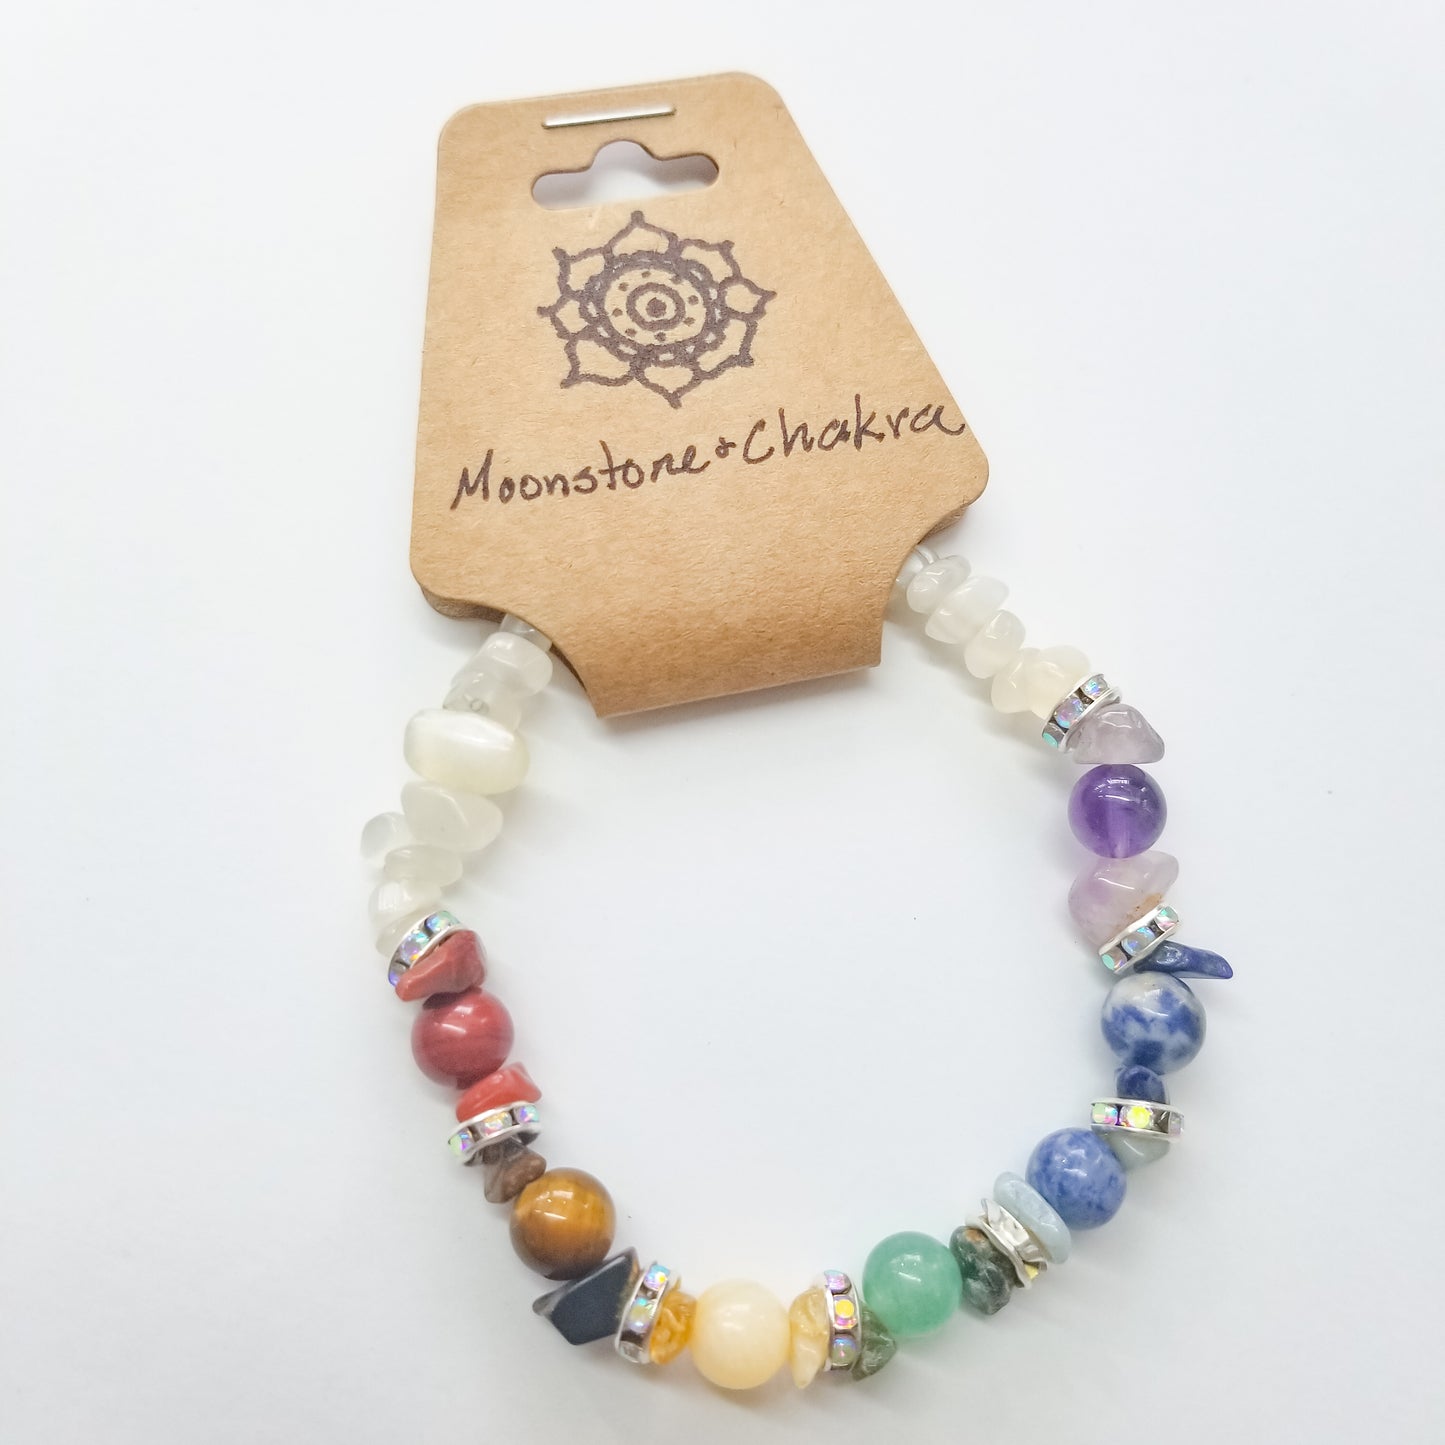 Moonstone & Chakra Crystal Bracelet